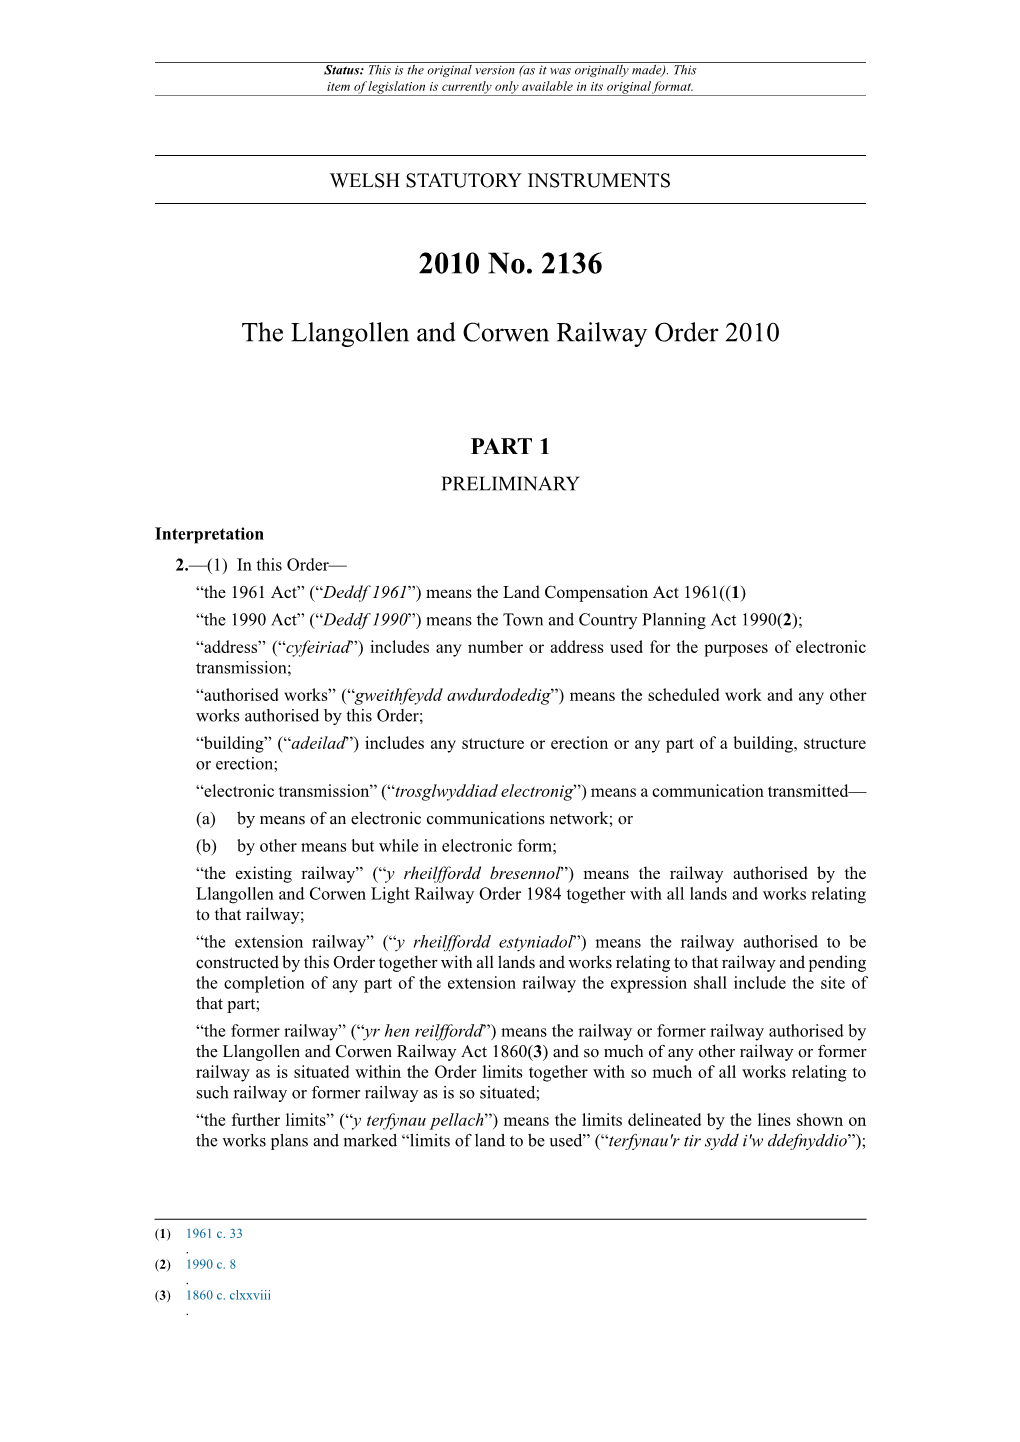 The Llangollen and Corwen Railway Order 2010